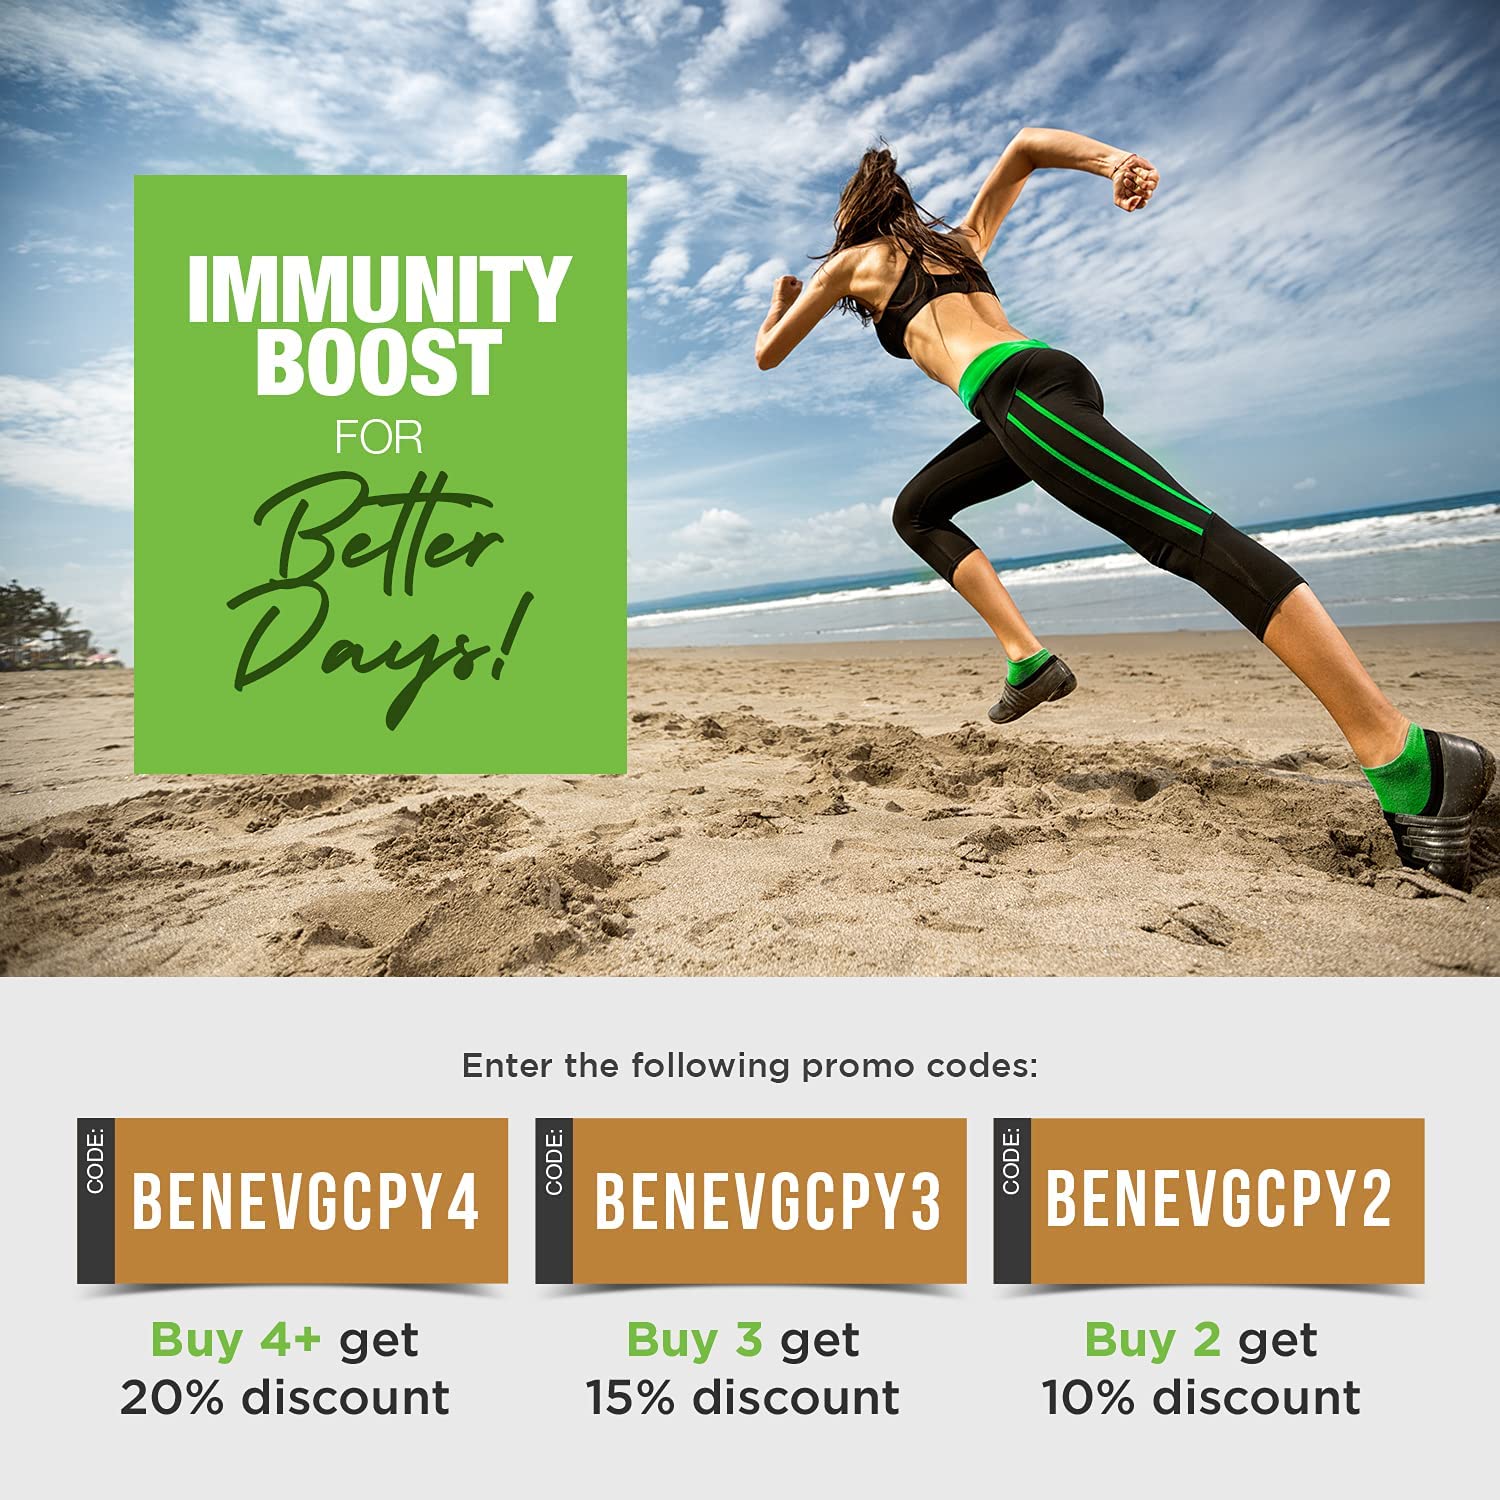 Immunity boost for better days